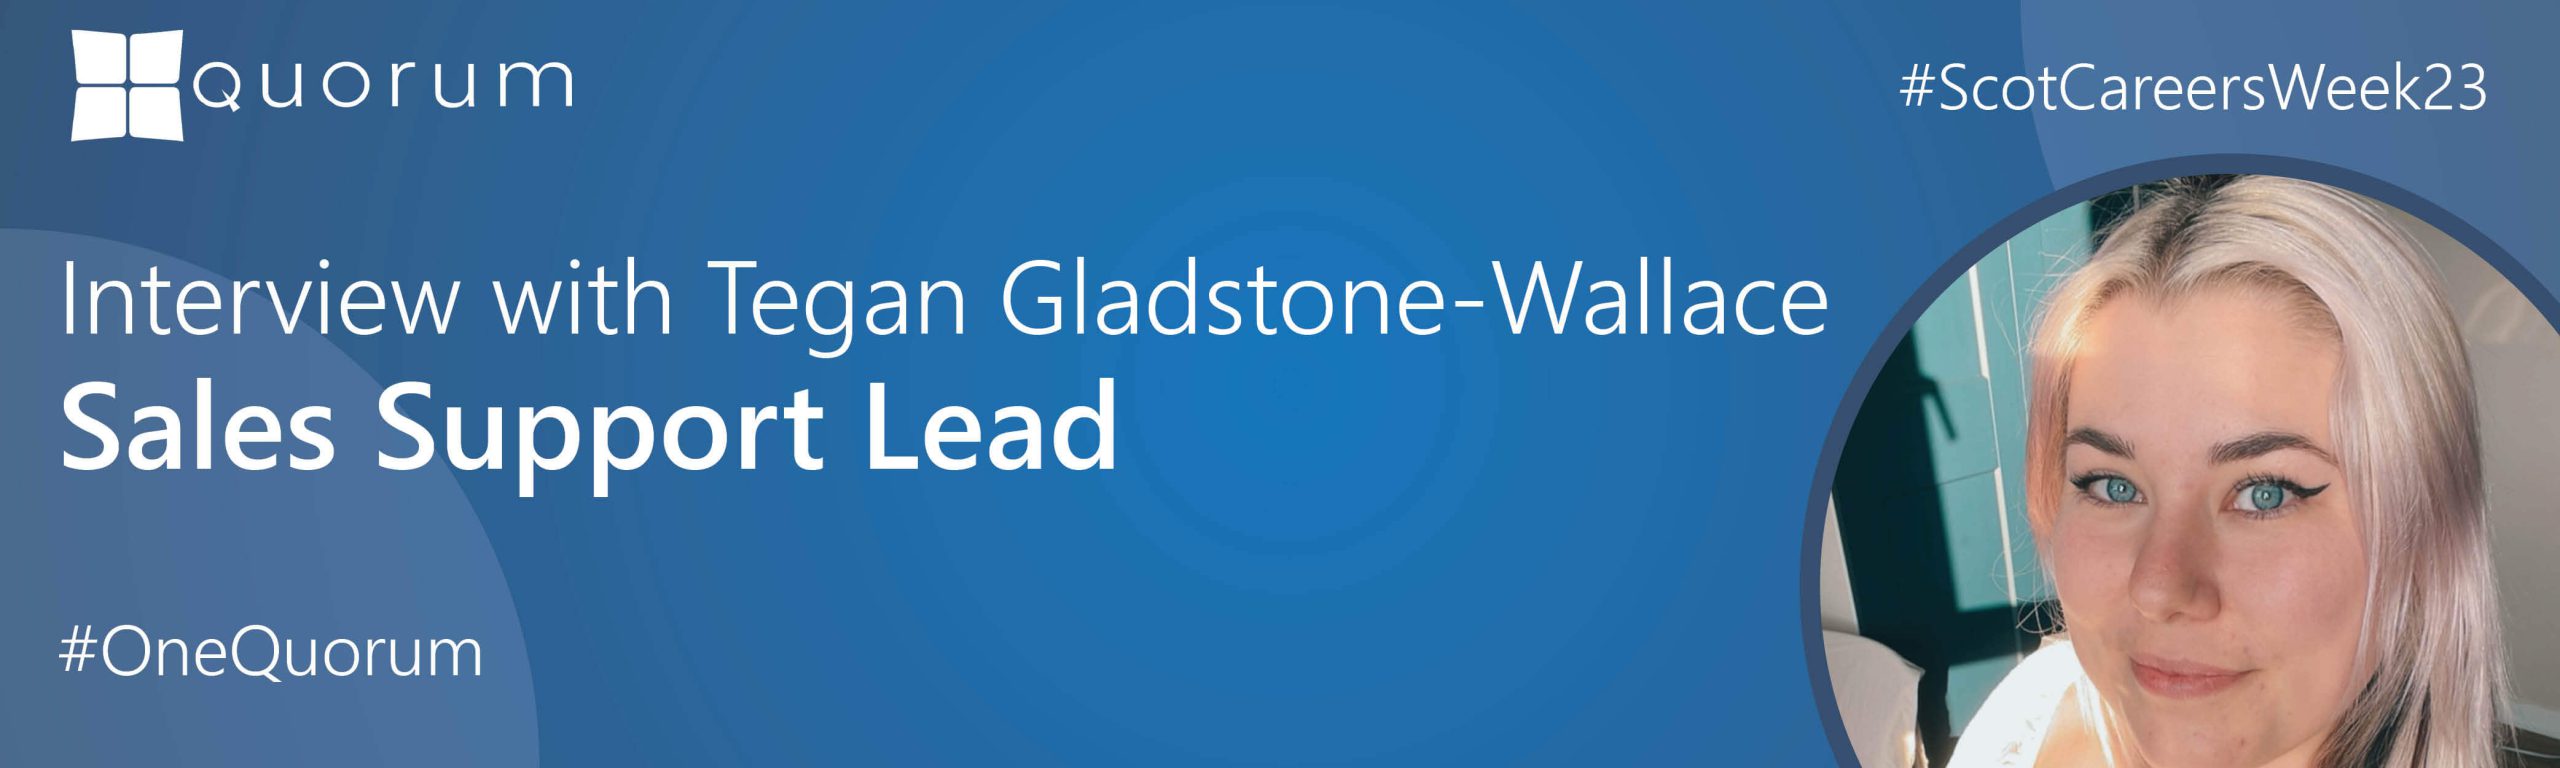 Website Banner Scottish Careers Week - Tegan Gladstone-Wallace